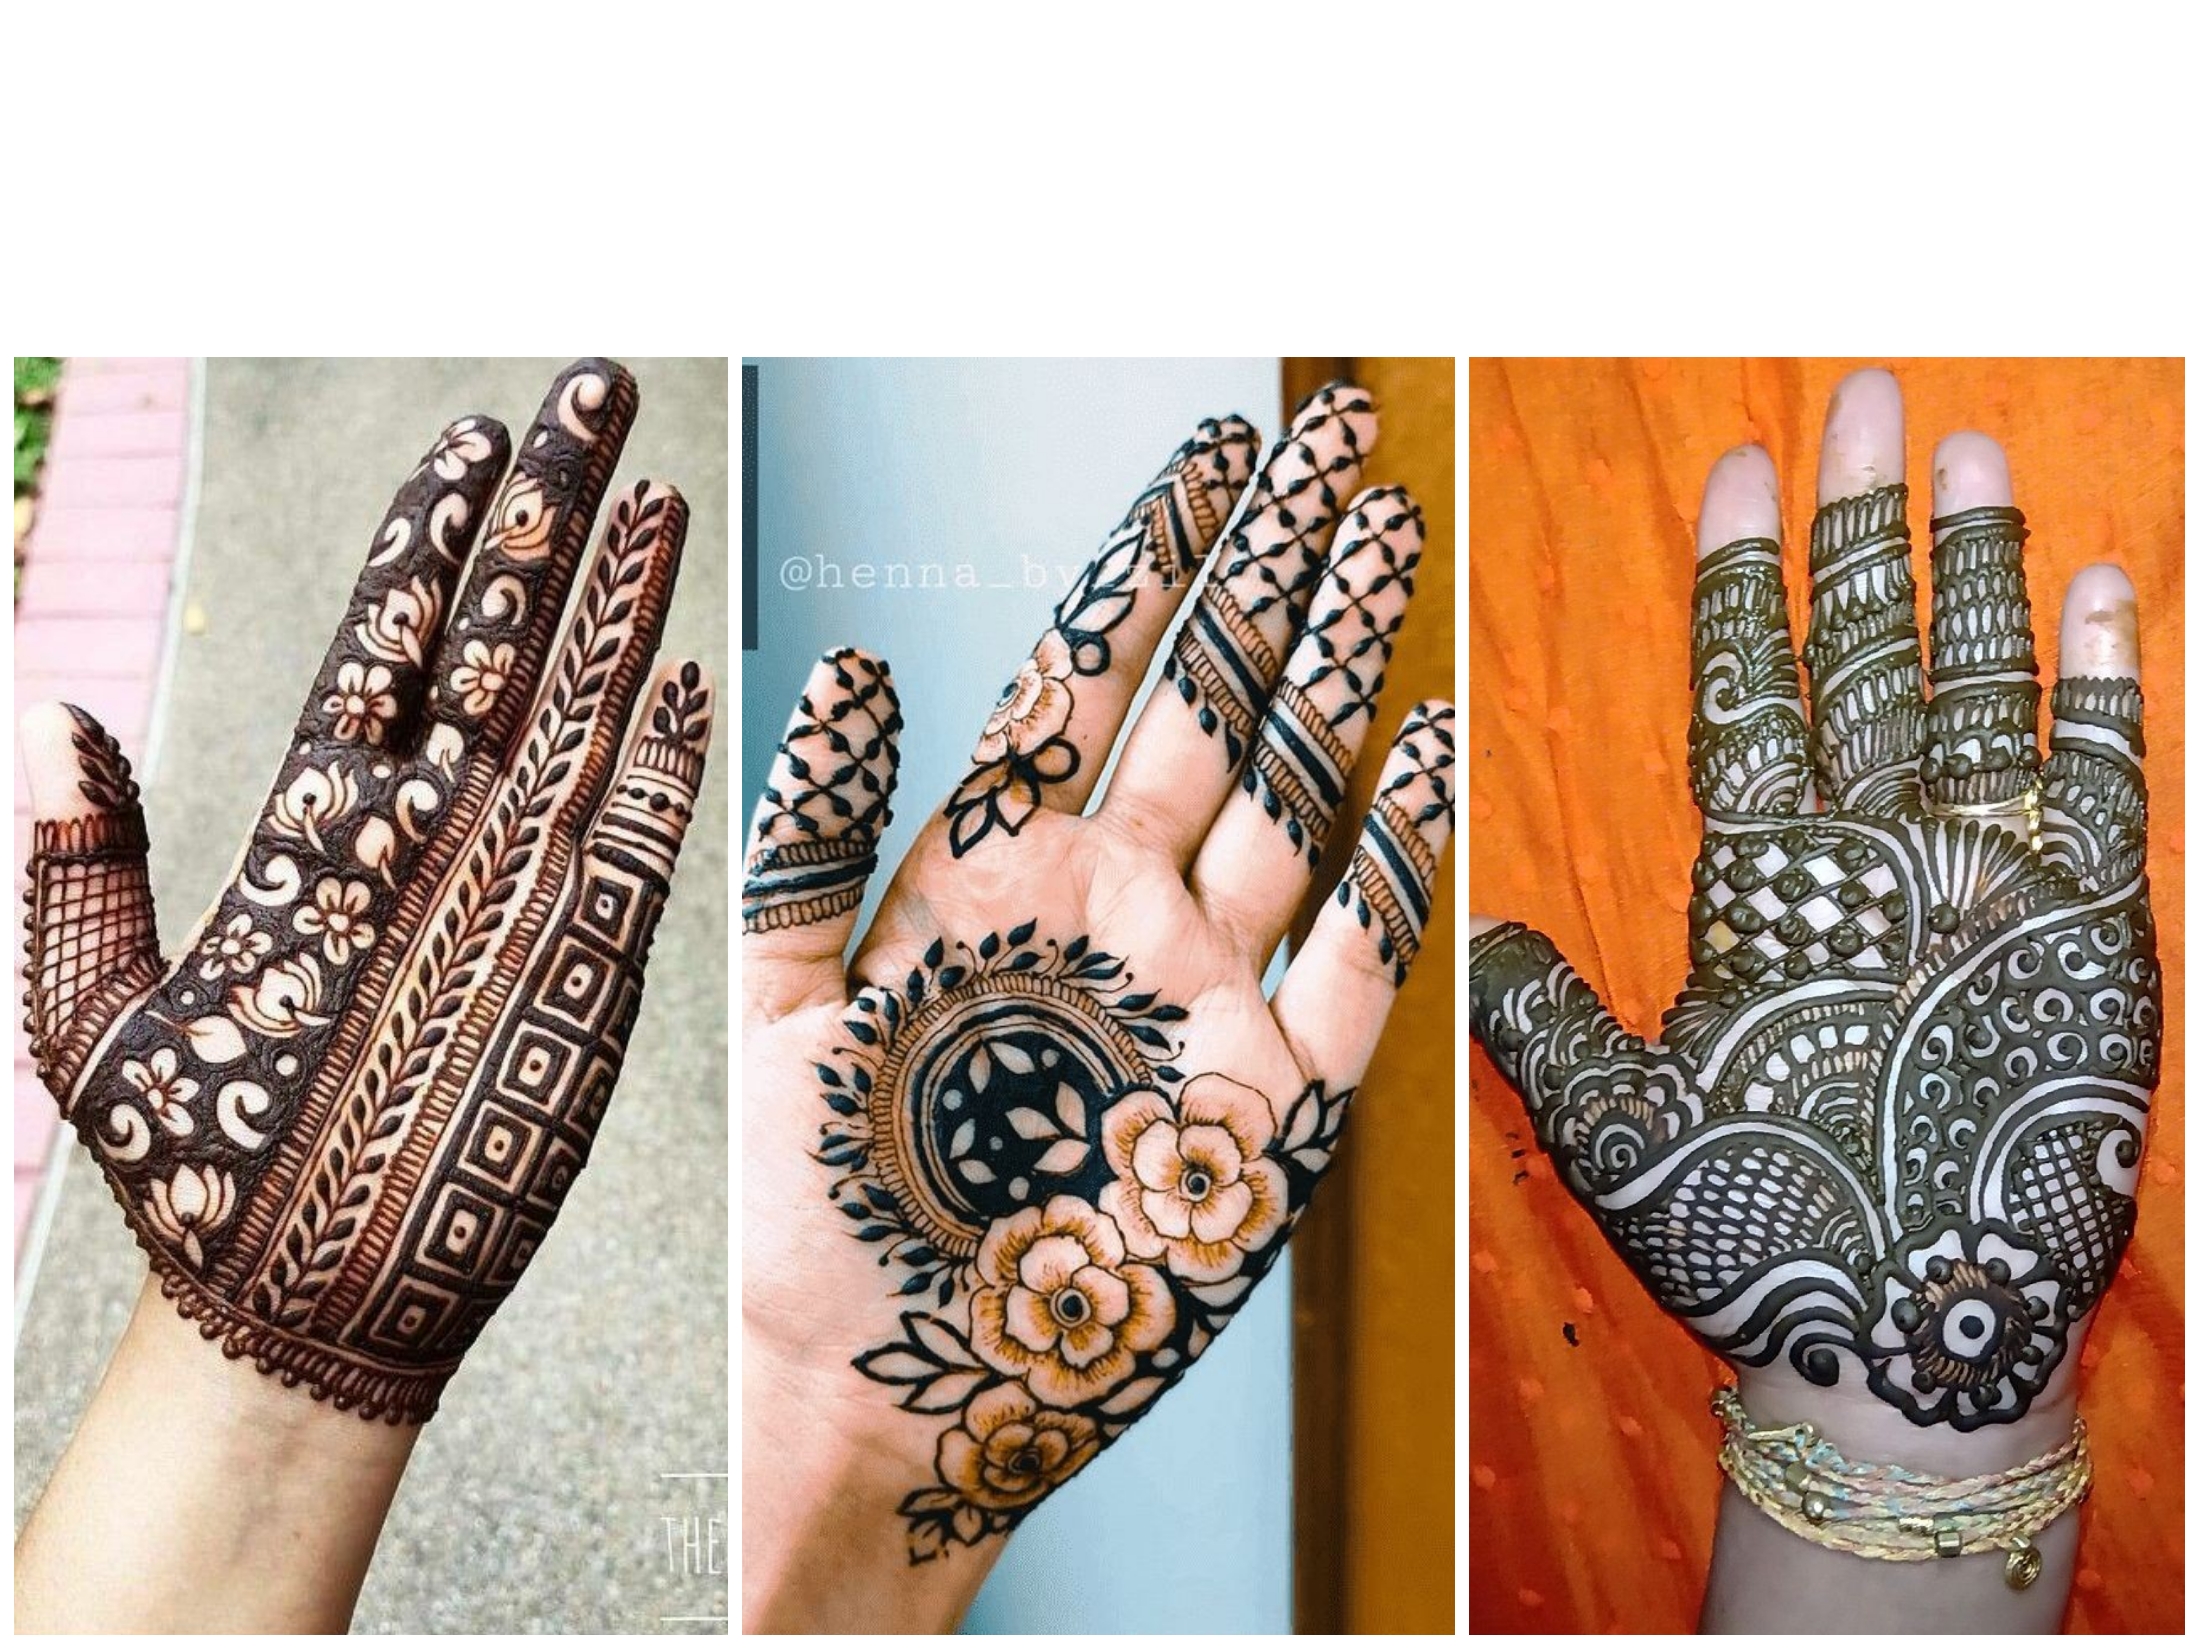 Top 13 striking mehndi designs to adorn your hands | PINKVILLA